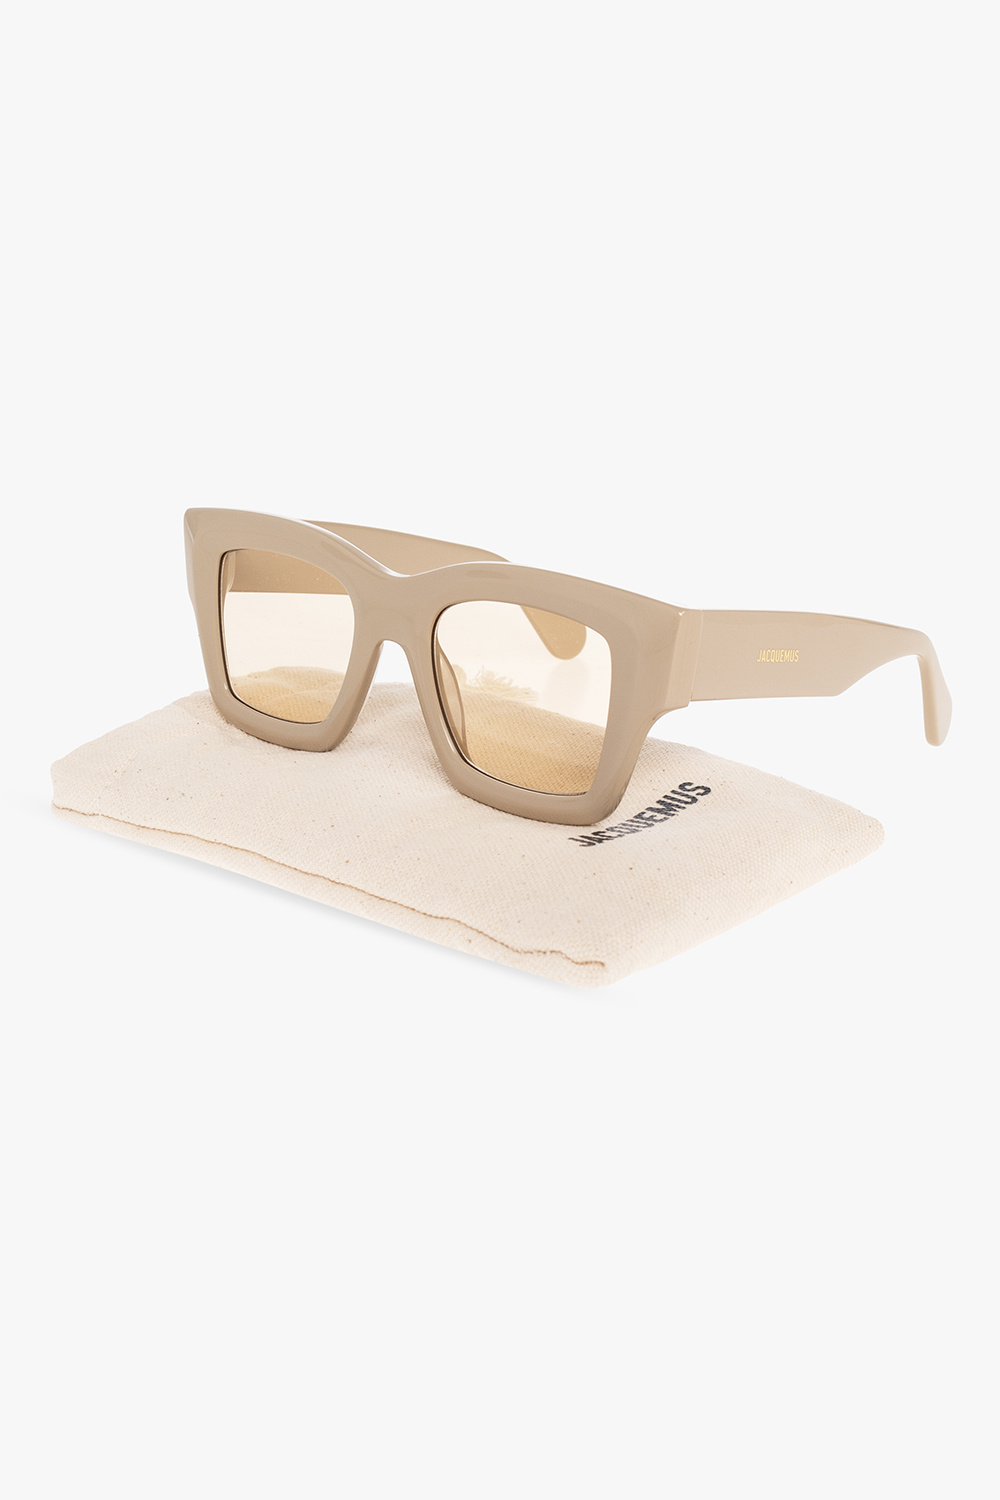 Jacquemus ‘Baci’ ray sunglasses